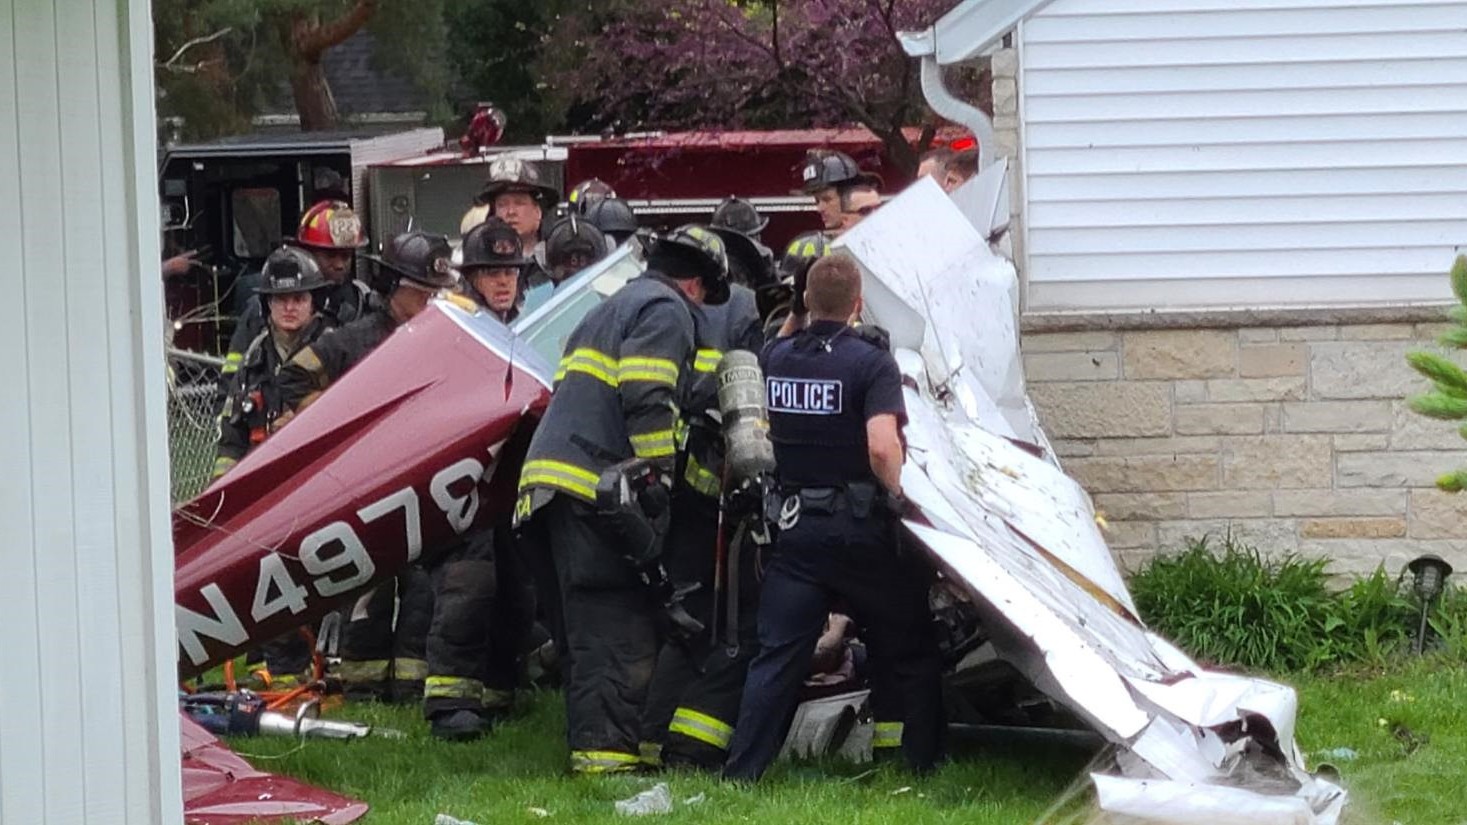 18-year-old pilot critically injured after crashing small aircraft into Wauwatosa neighborhood